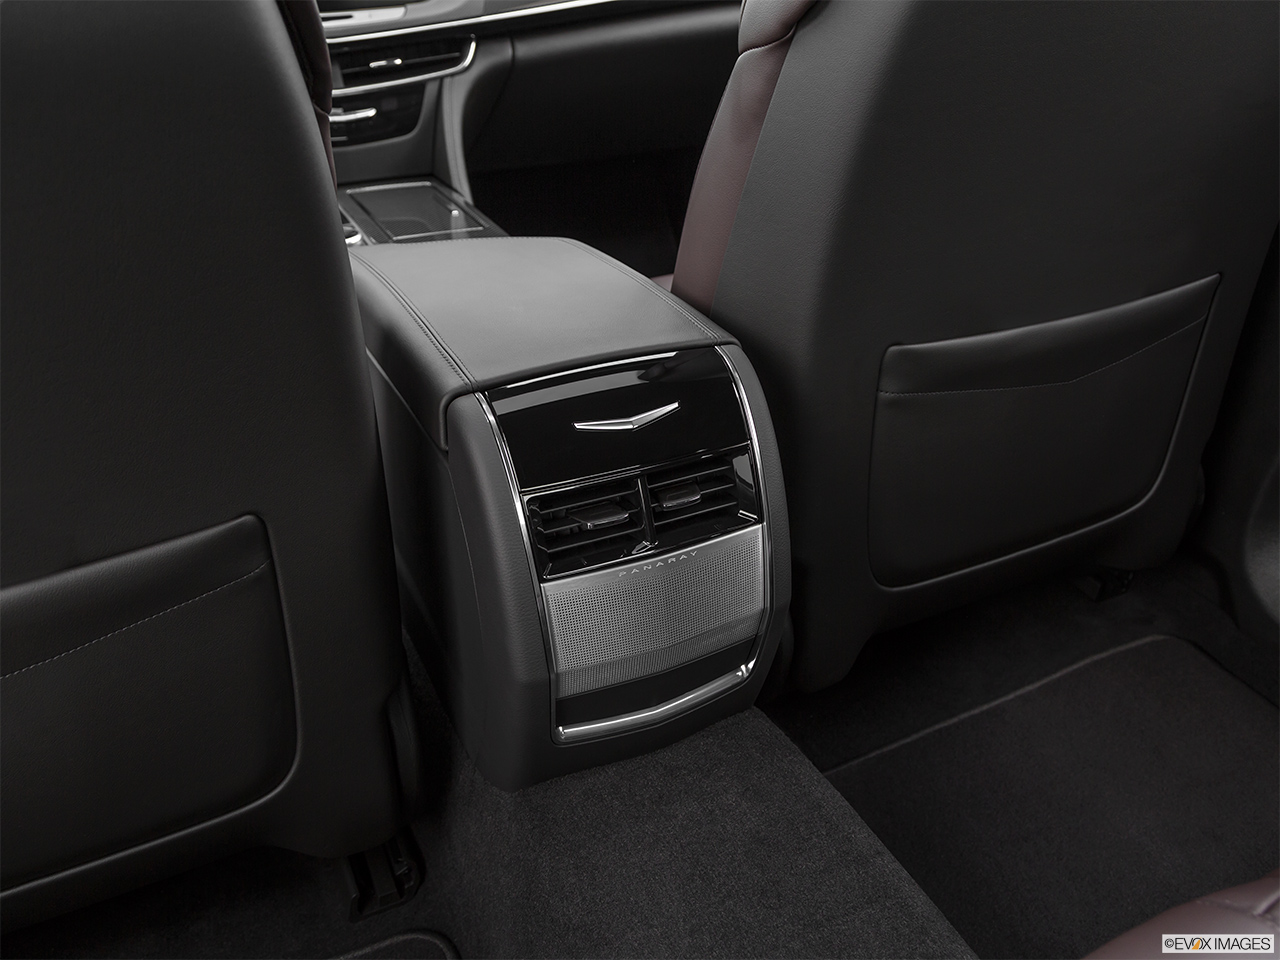 2019 Cadillac CT6-V Base Rear A/C controls. 